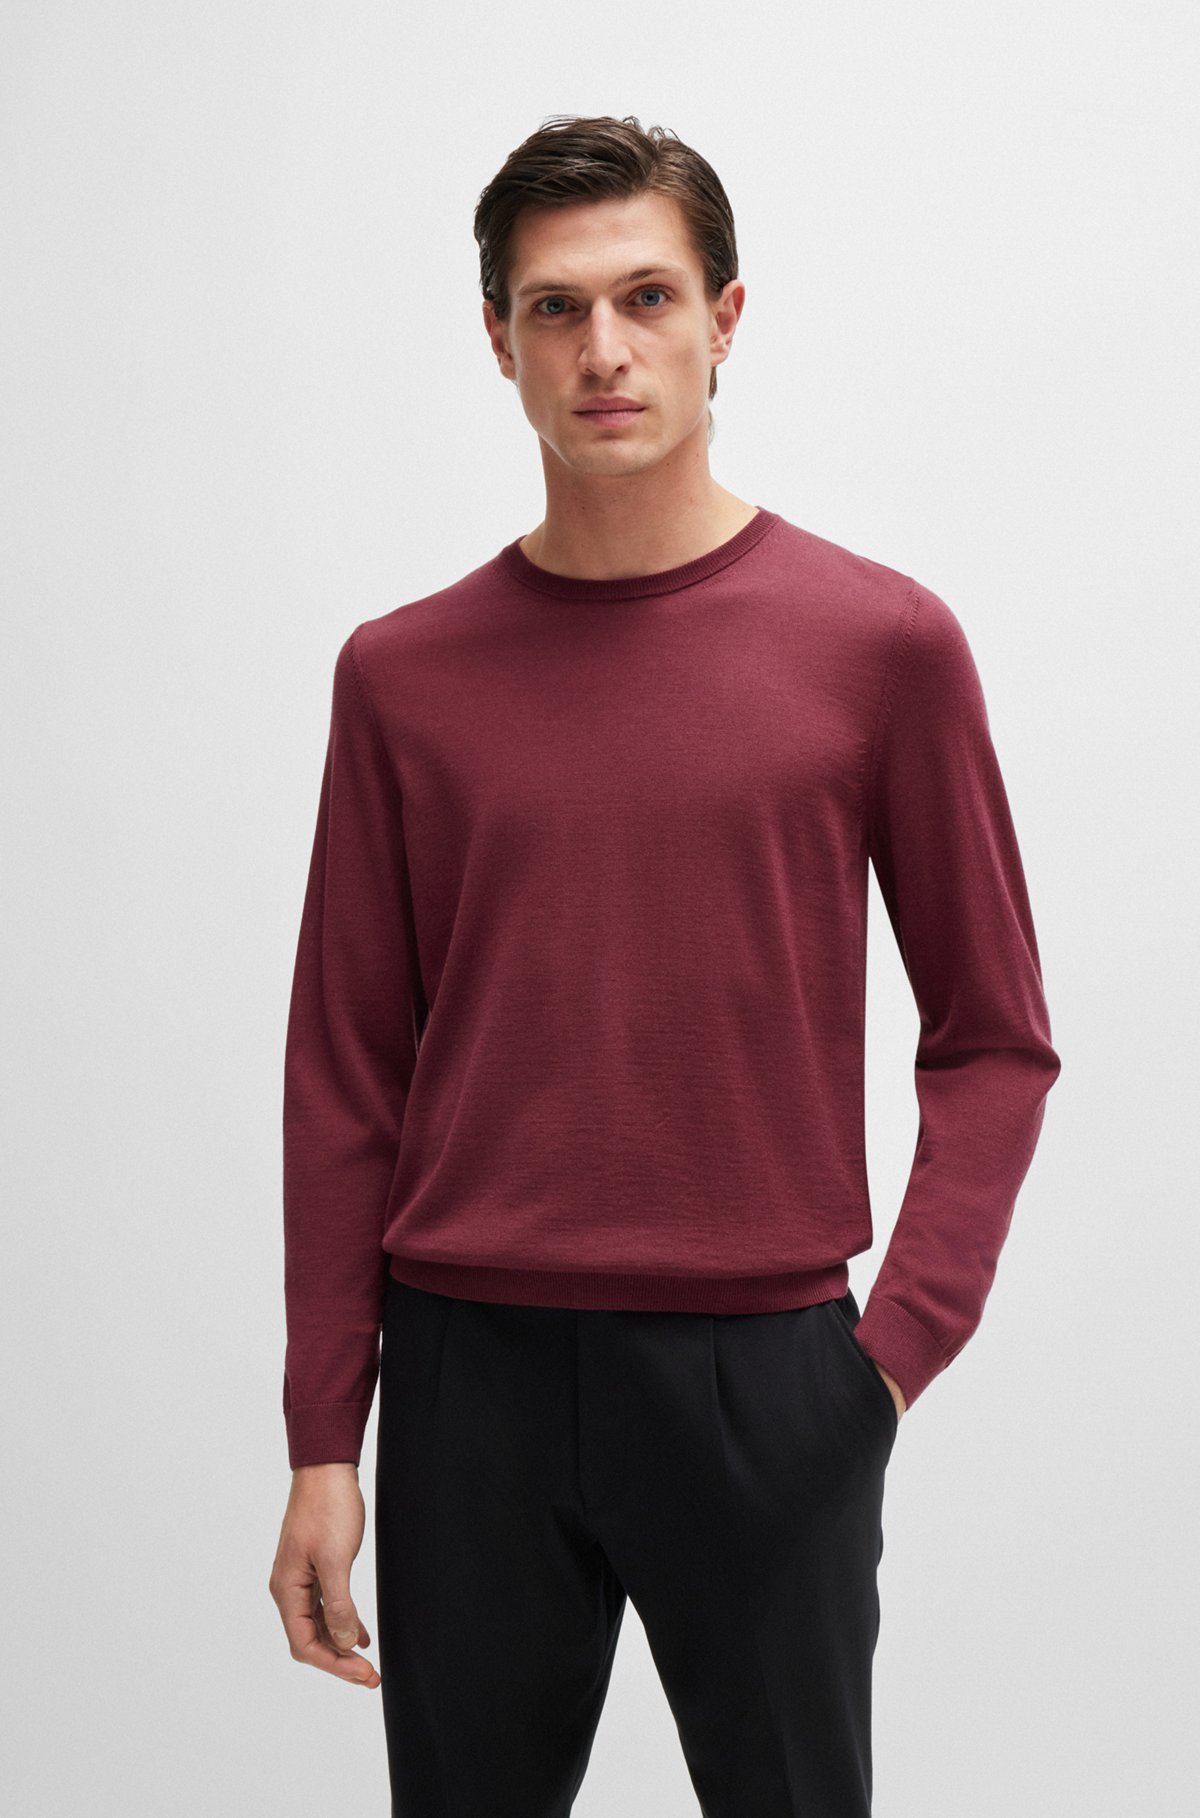 BOSS - Slim-fit sweater in virgin wool with crew neckline